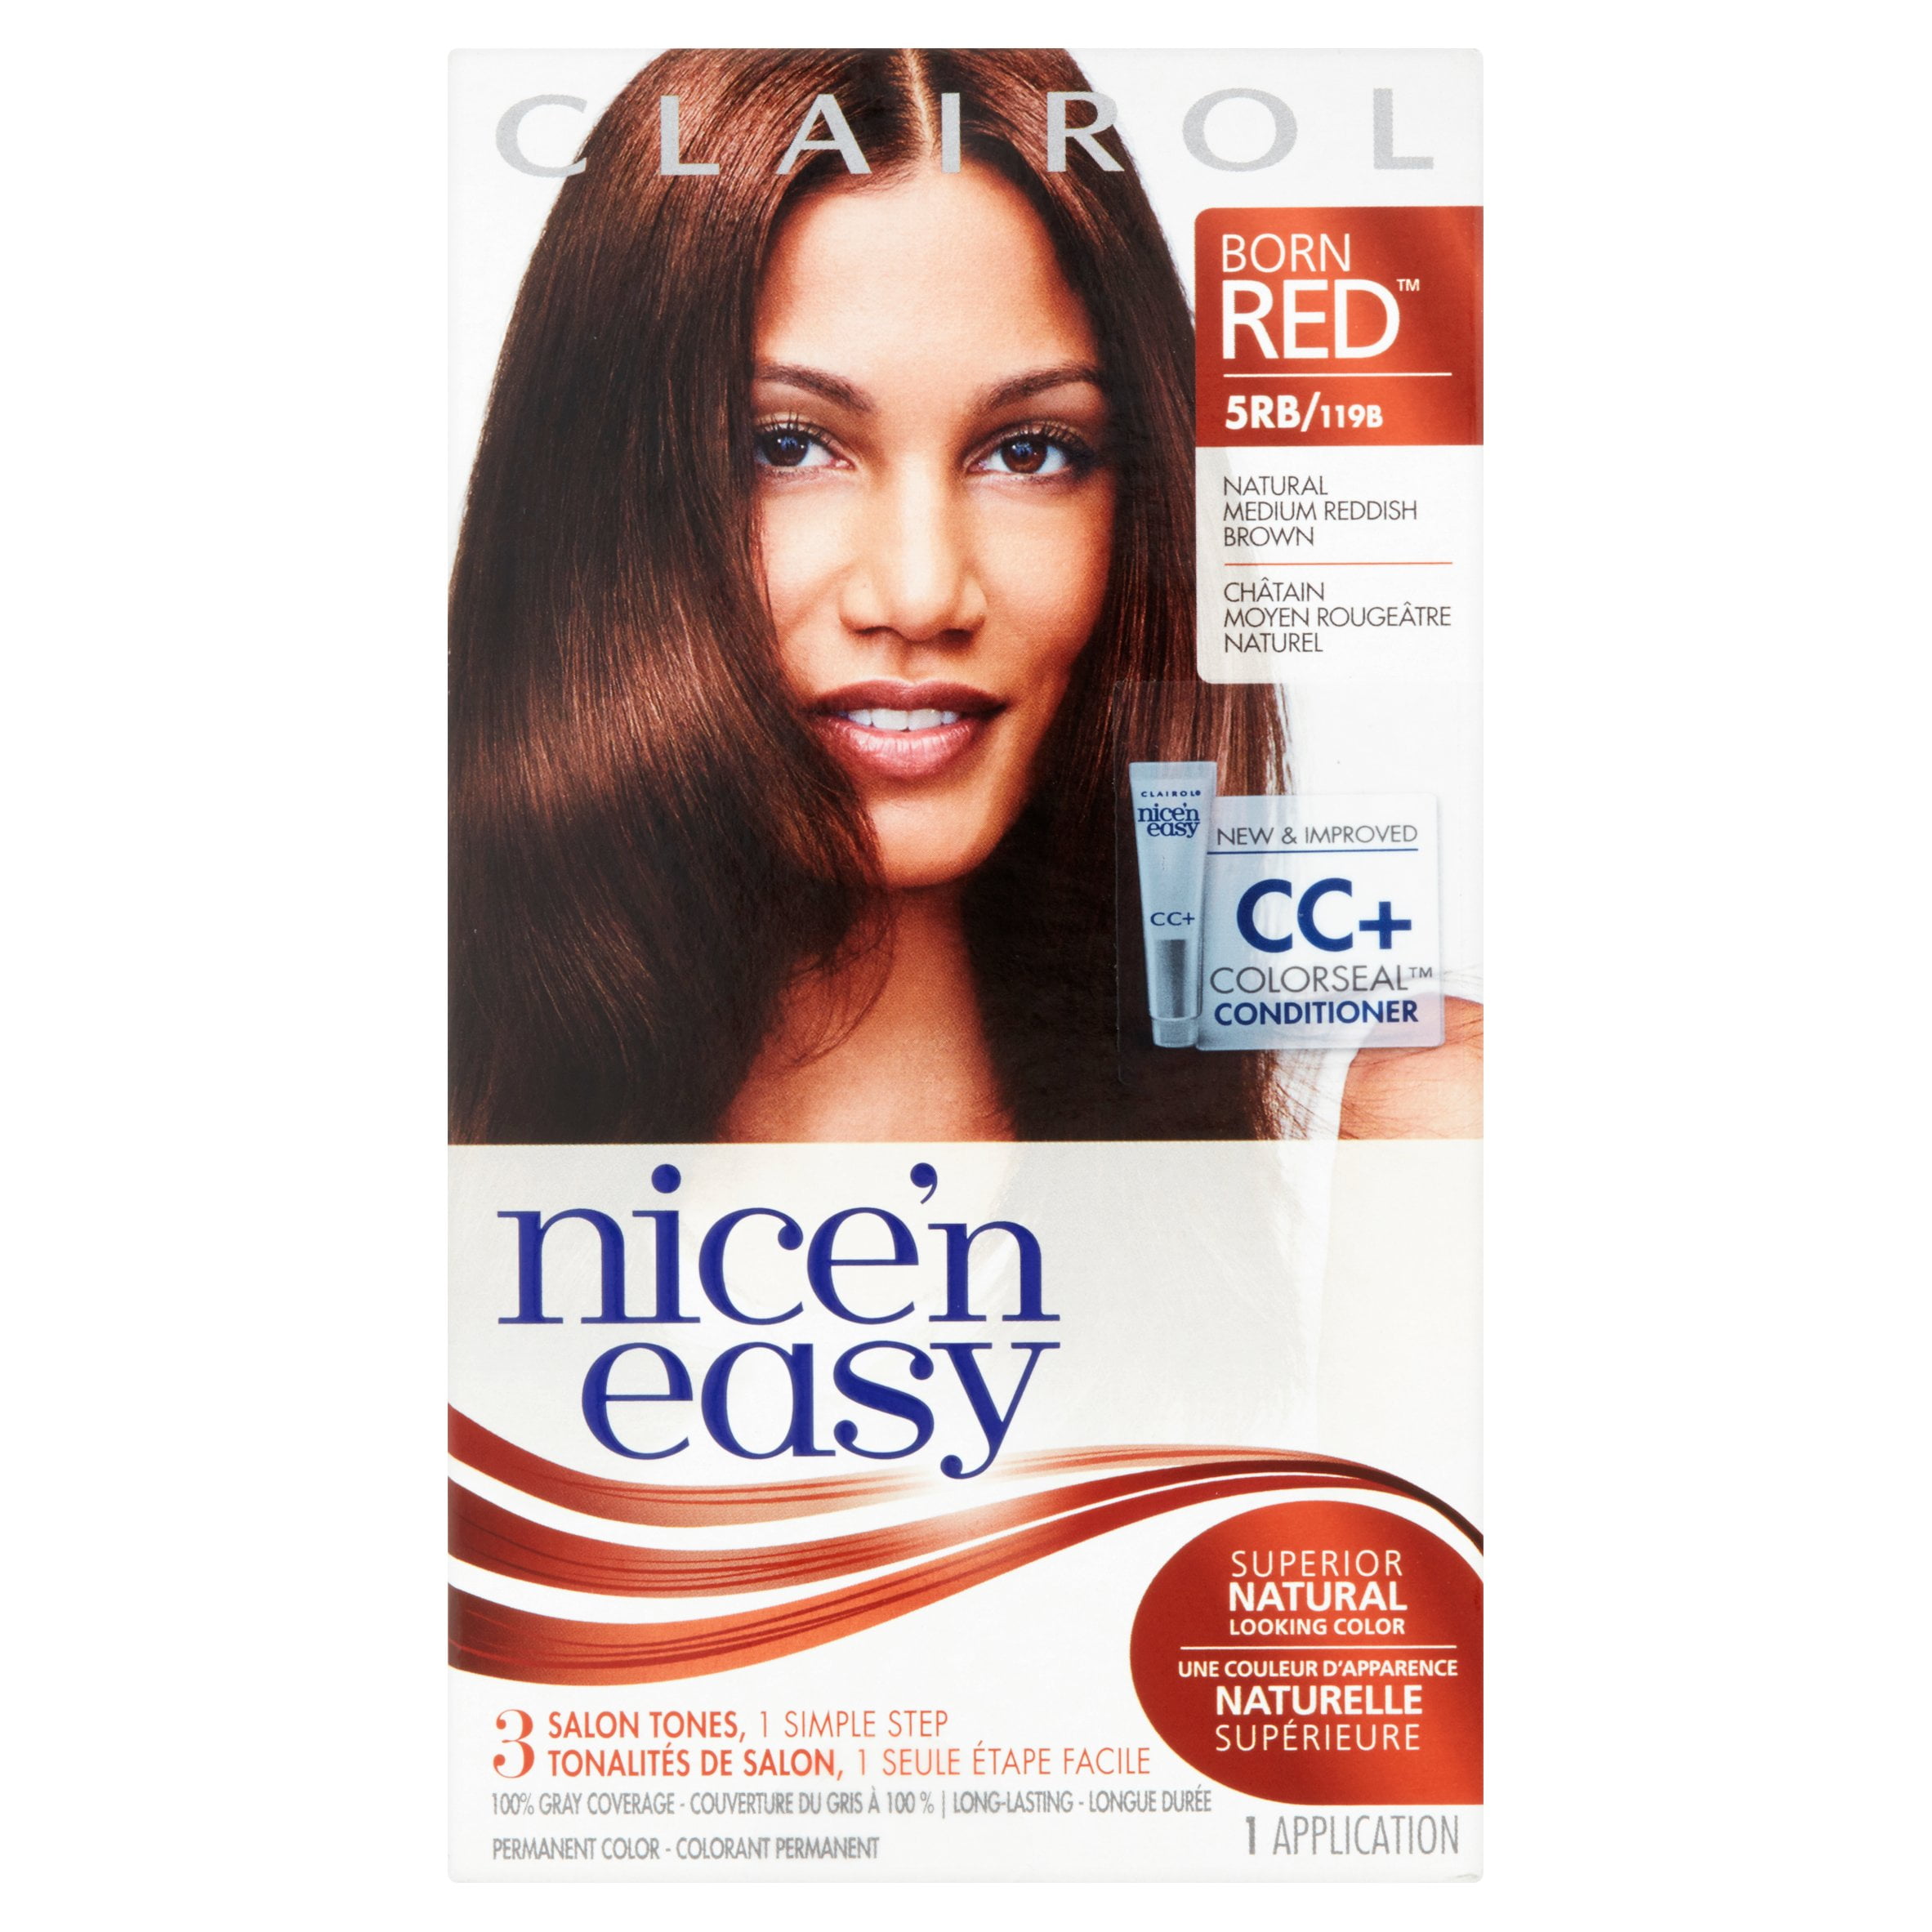 Clairol Nice 'n Easy Born Red Permanent Hair Color, 5RB/119B Natural Medium  Reddish Brown, 1 Kit